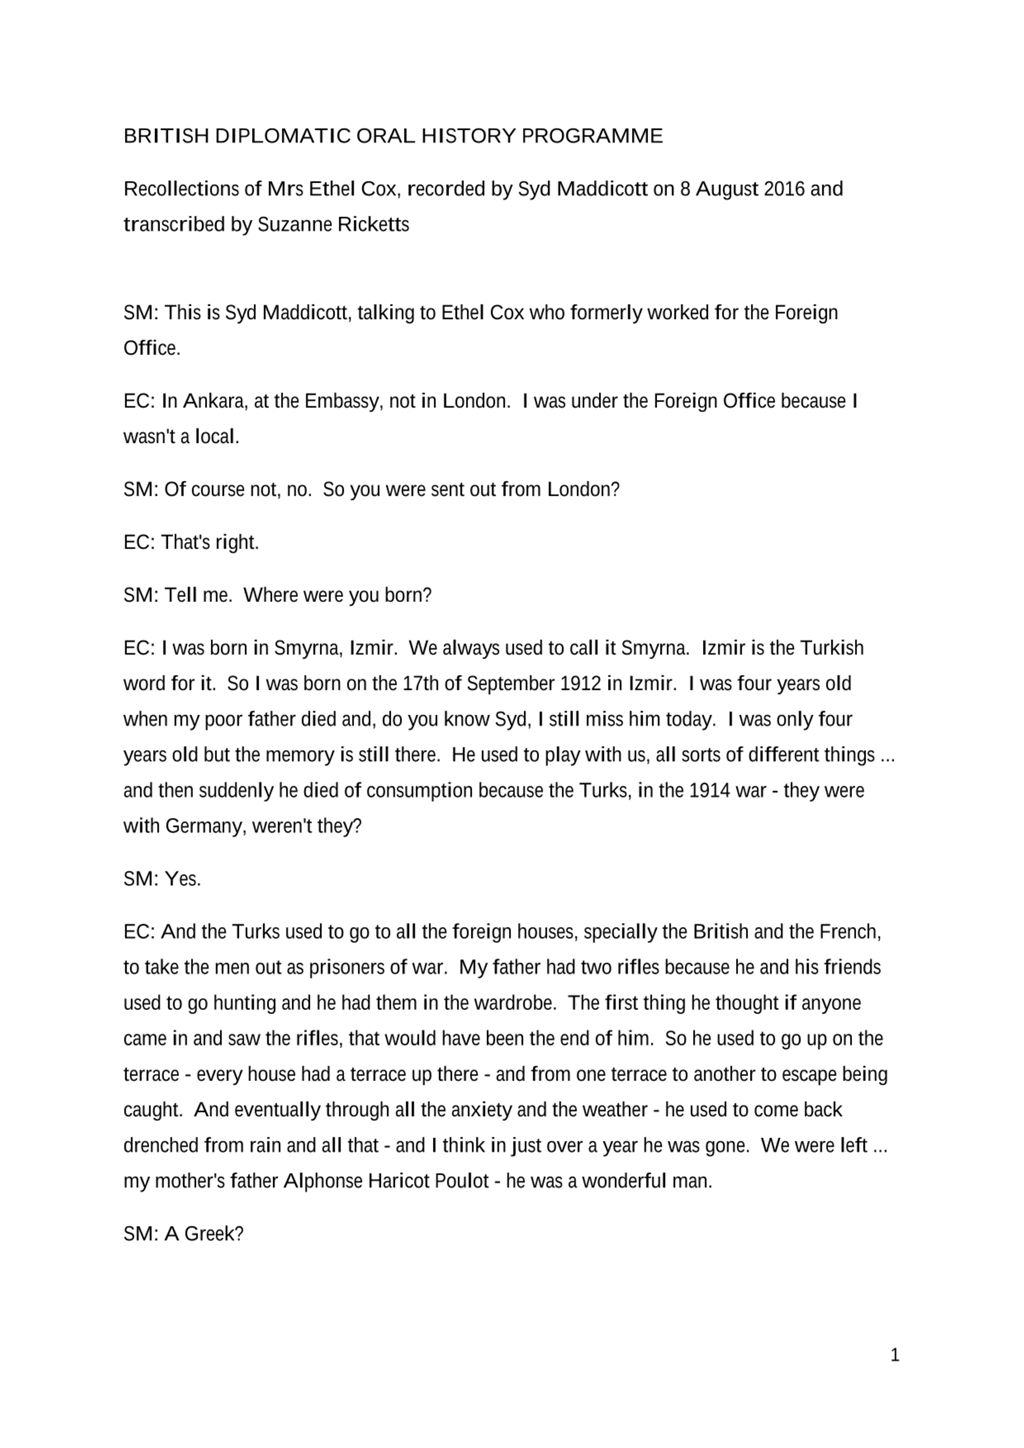 Miniature of Transcript of interview: Ethel Cox